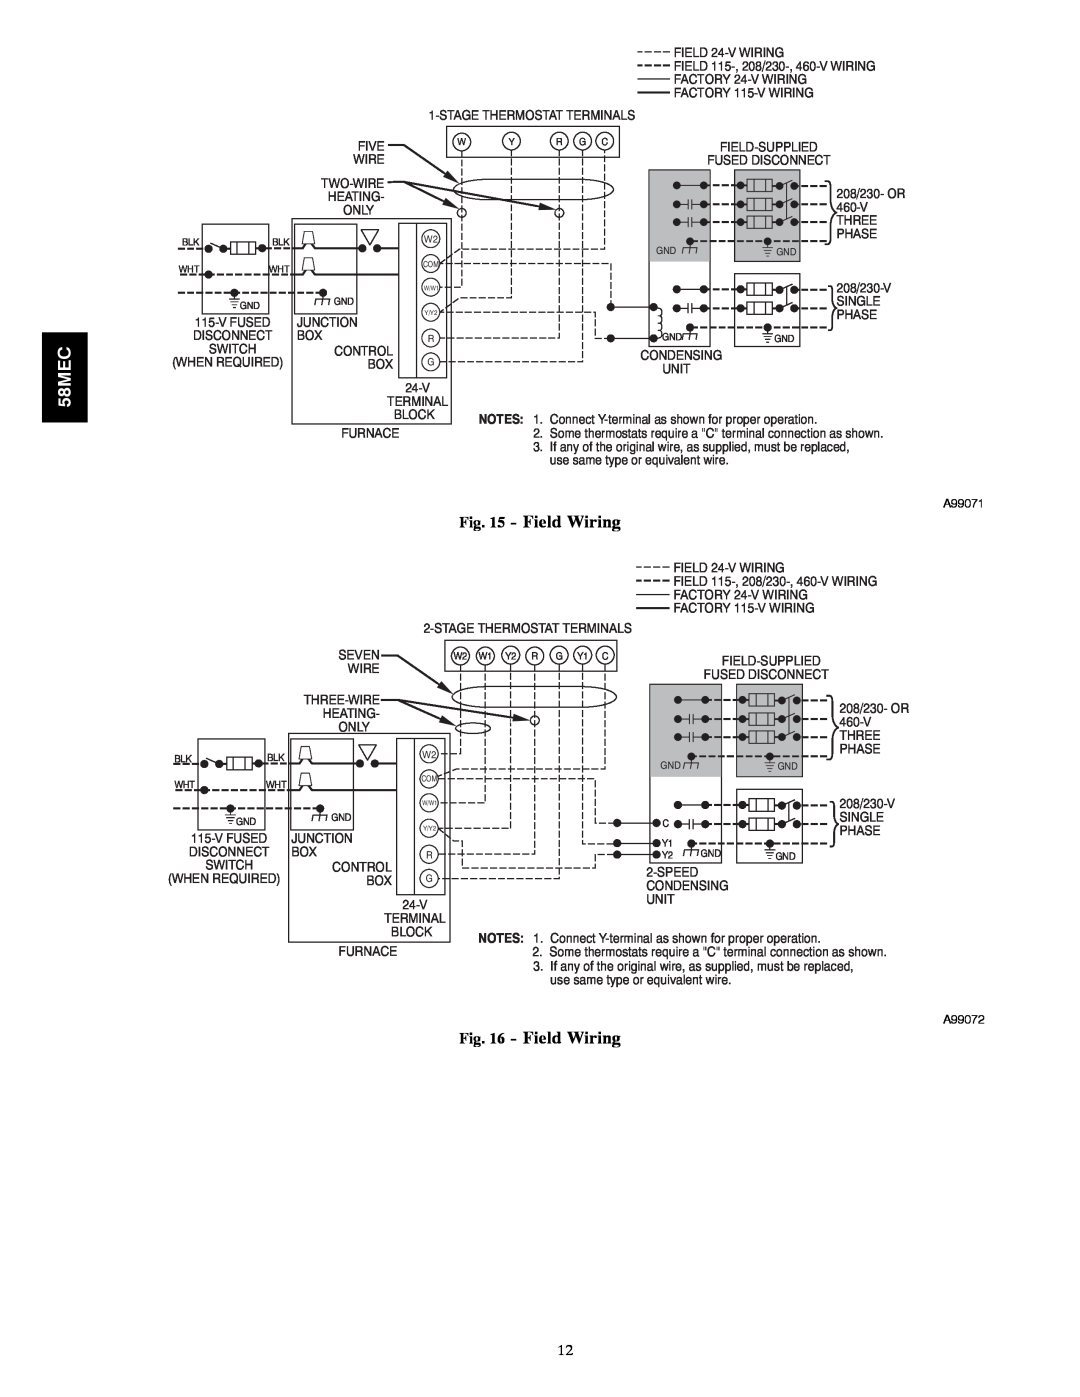 Carrier 58MEC instruction manual Field Wiring, A99071, A99072 